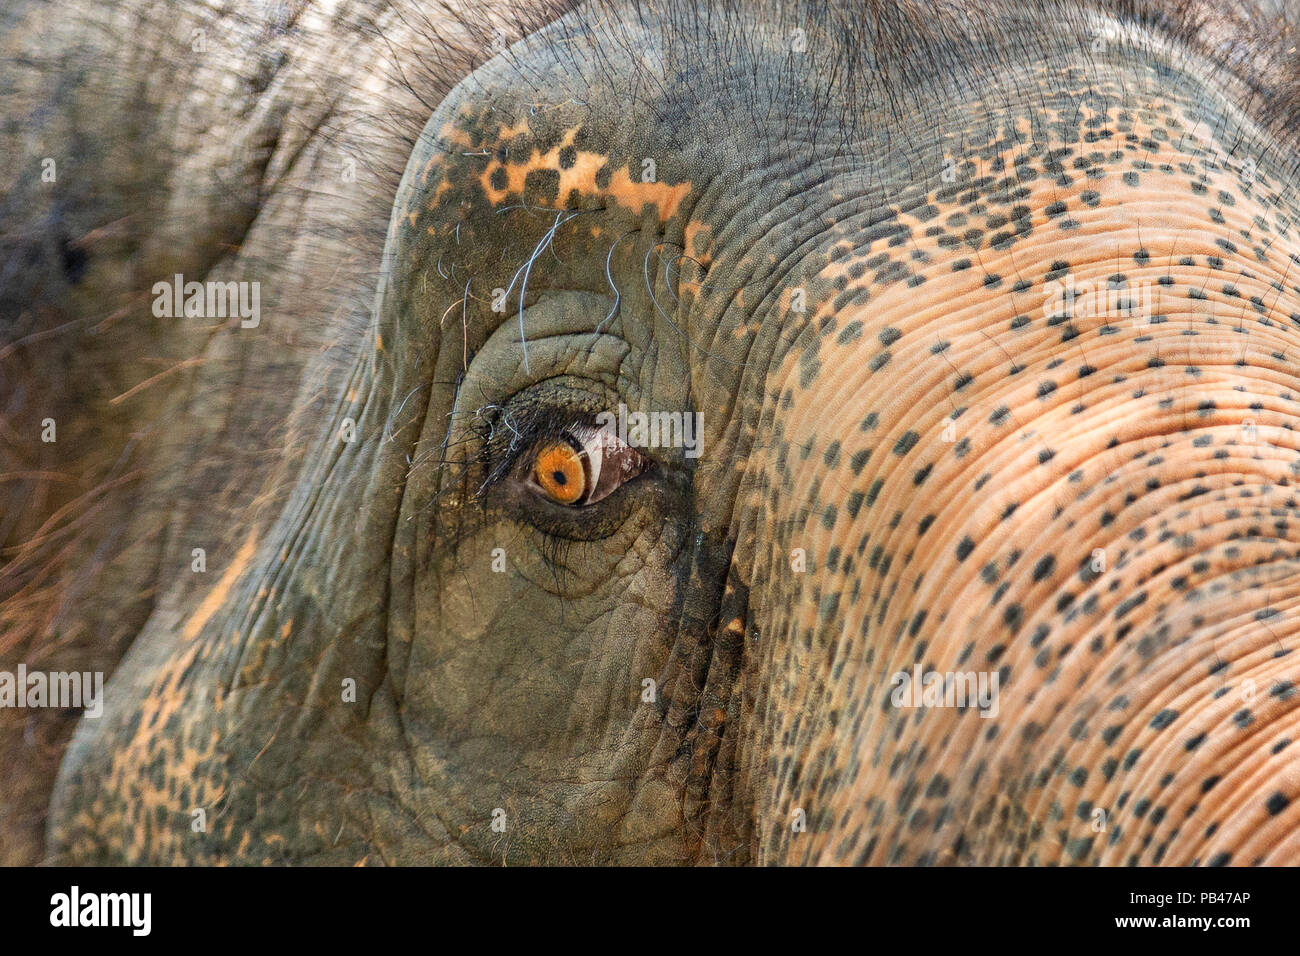 Eye of Asian elephant in Thailand Stock Photo